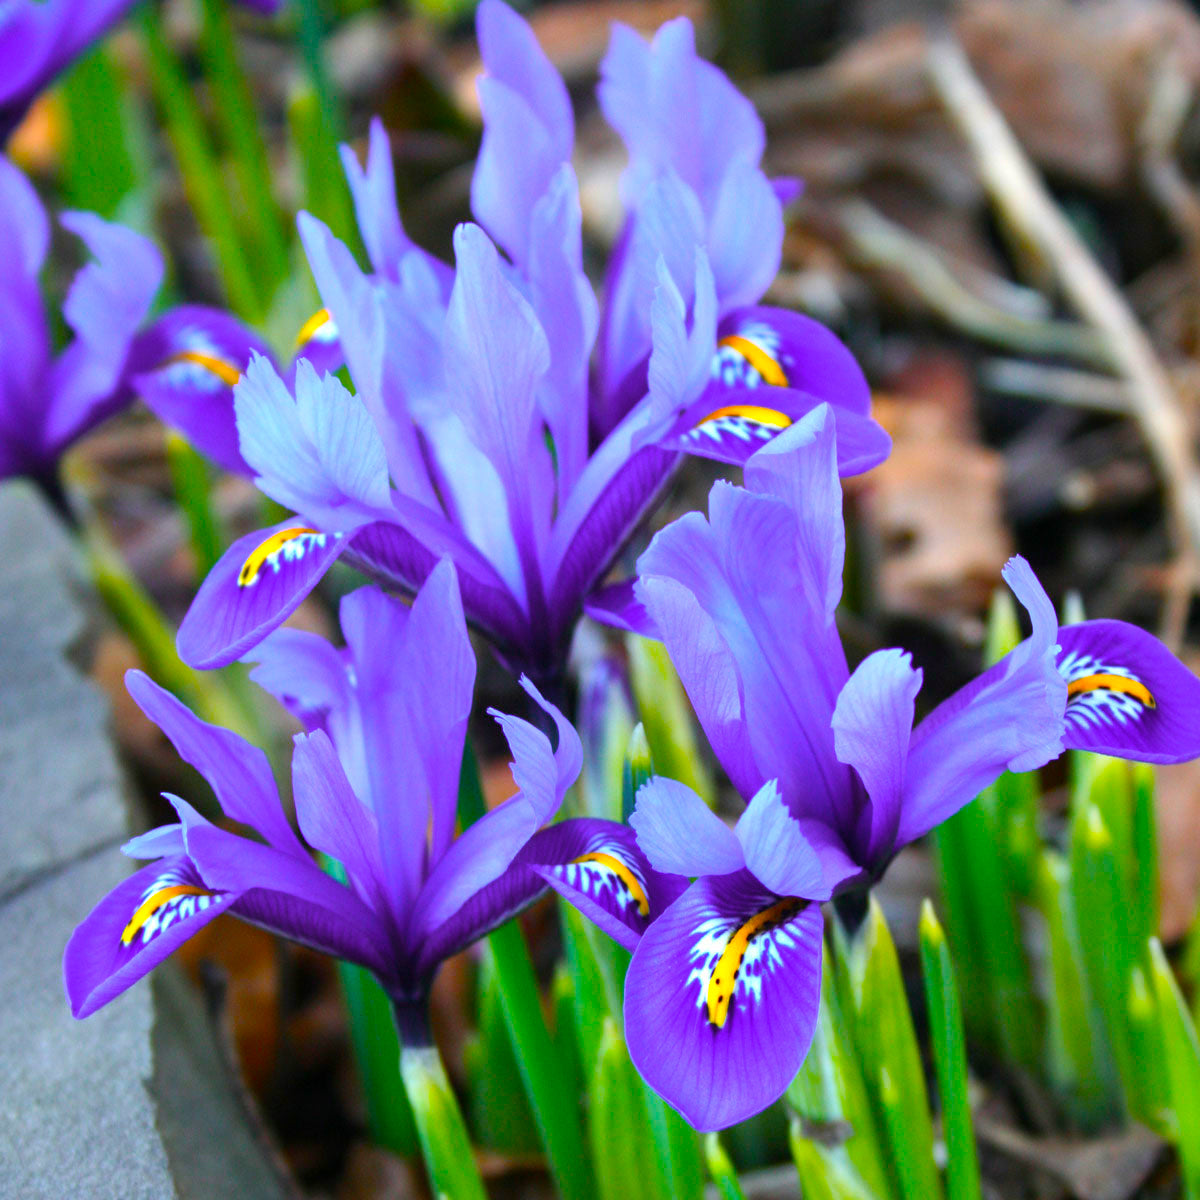 Iris flowers - Minnesota Wildflower Mix